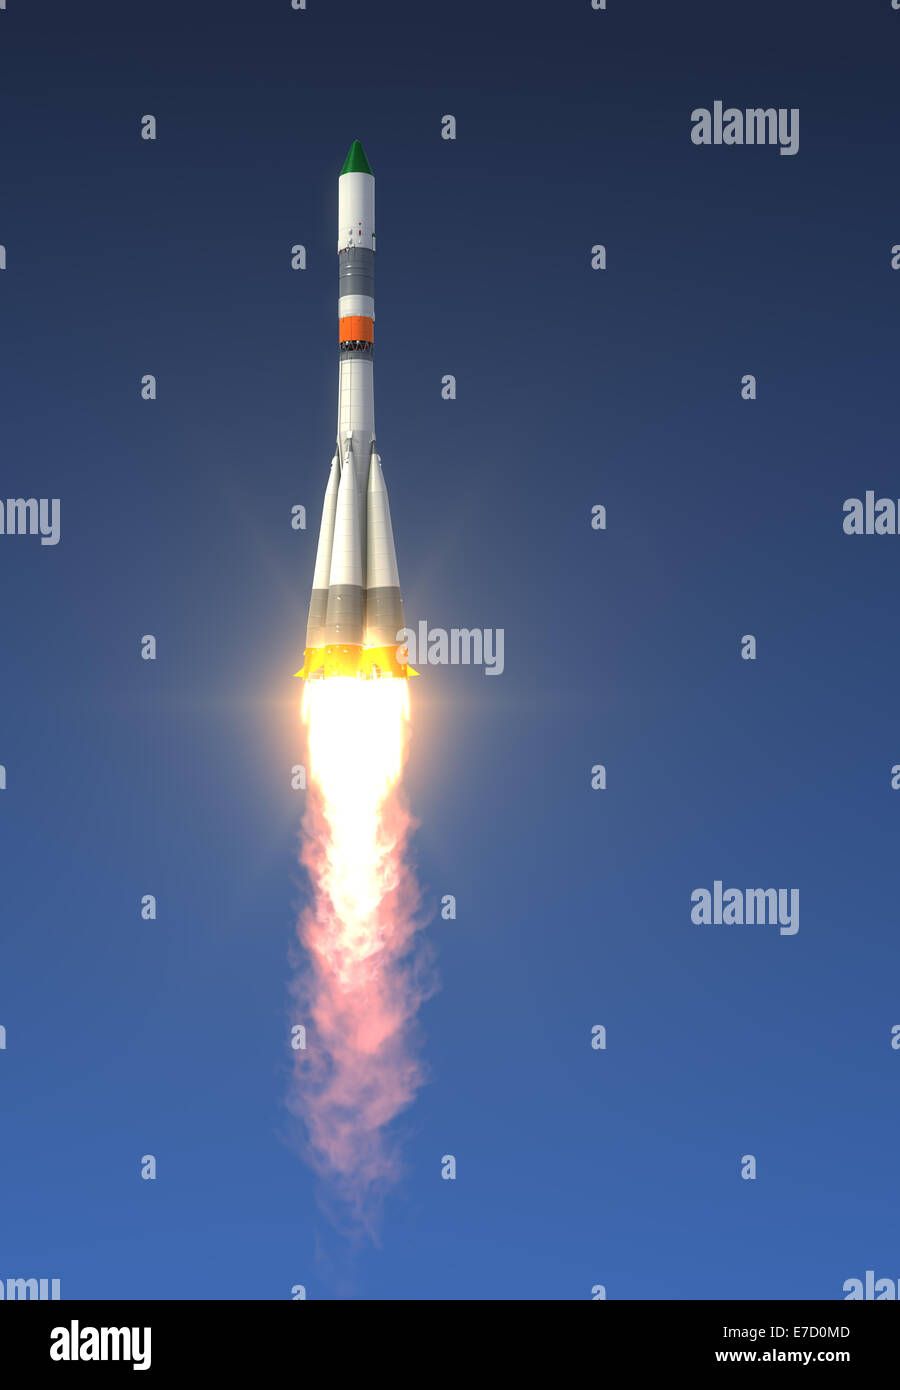 Fracht-Raketenstart auf Himmelshintergrund Stockfoto